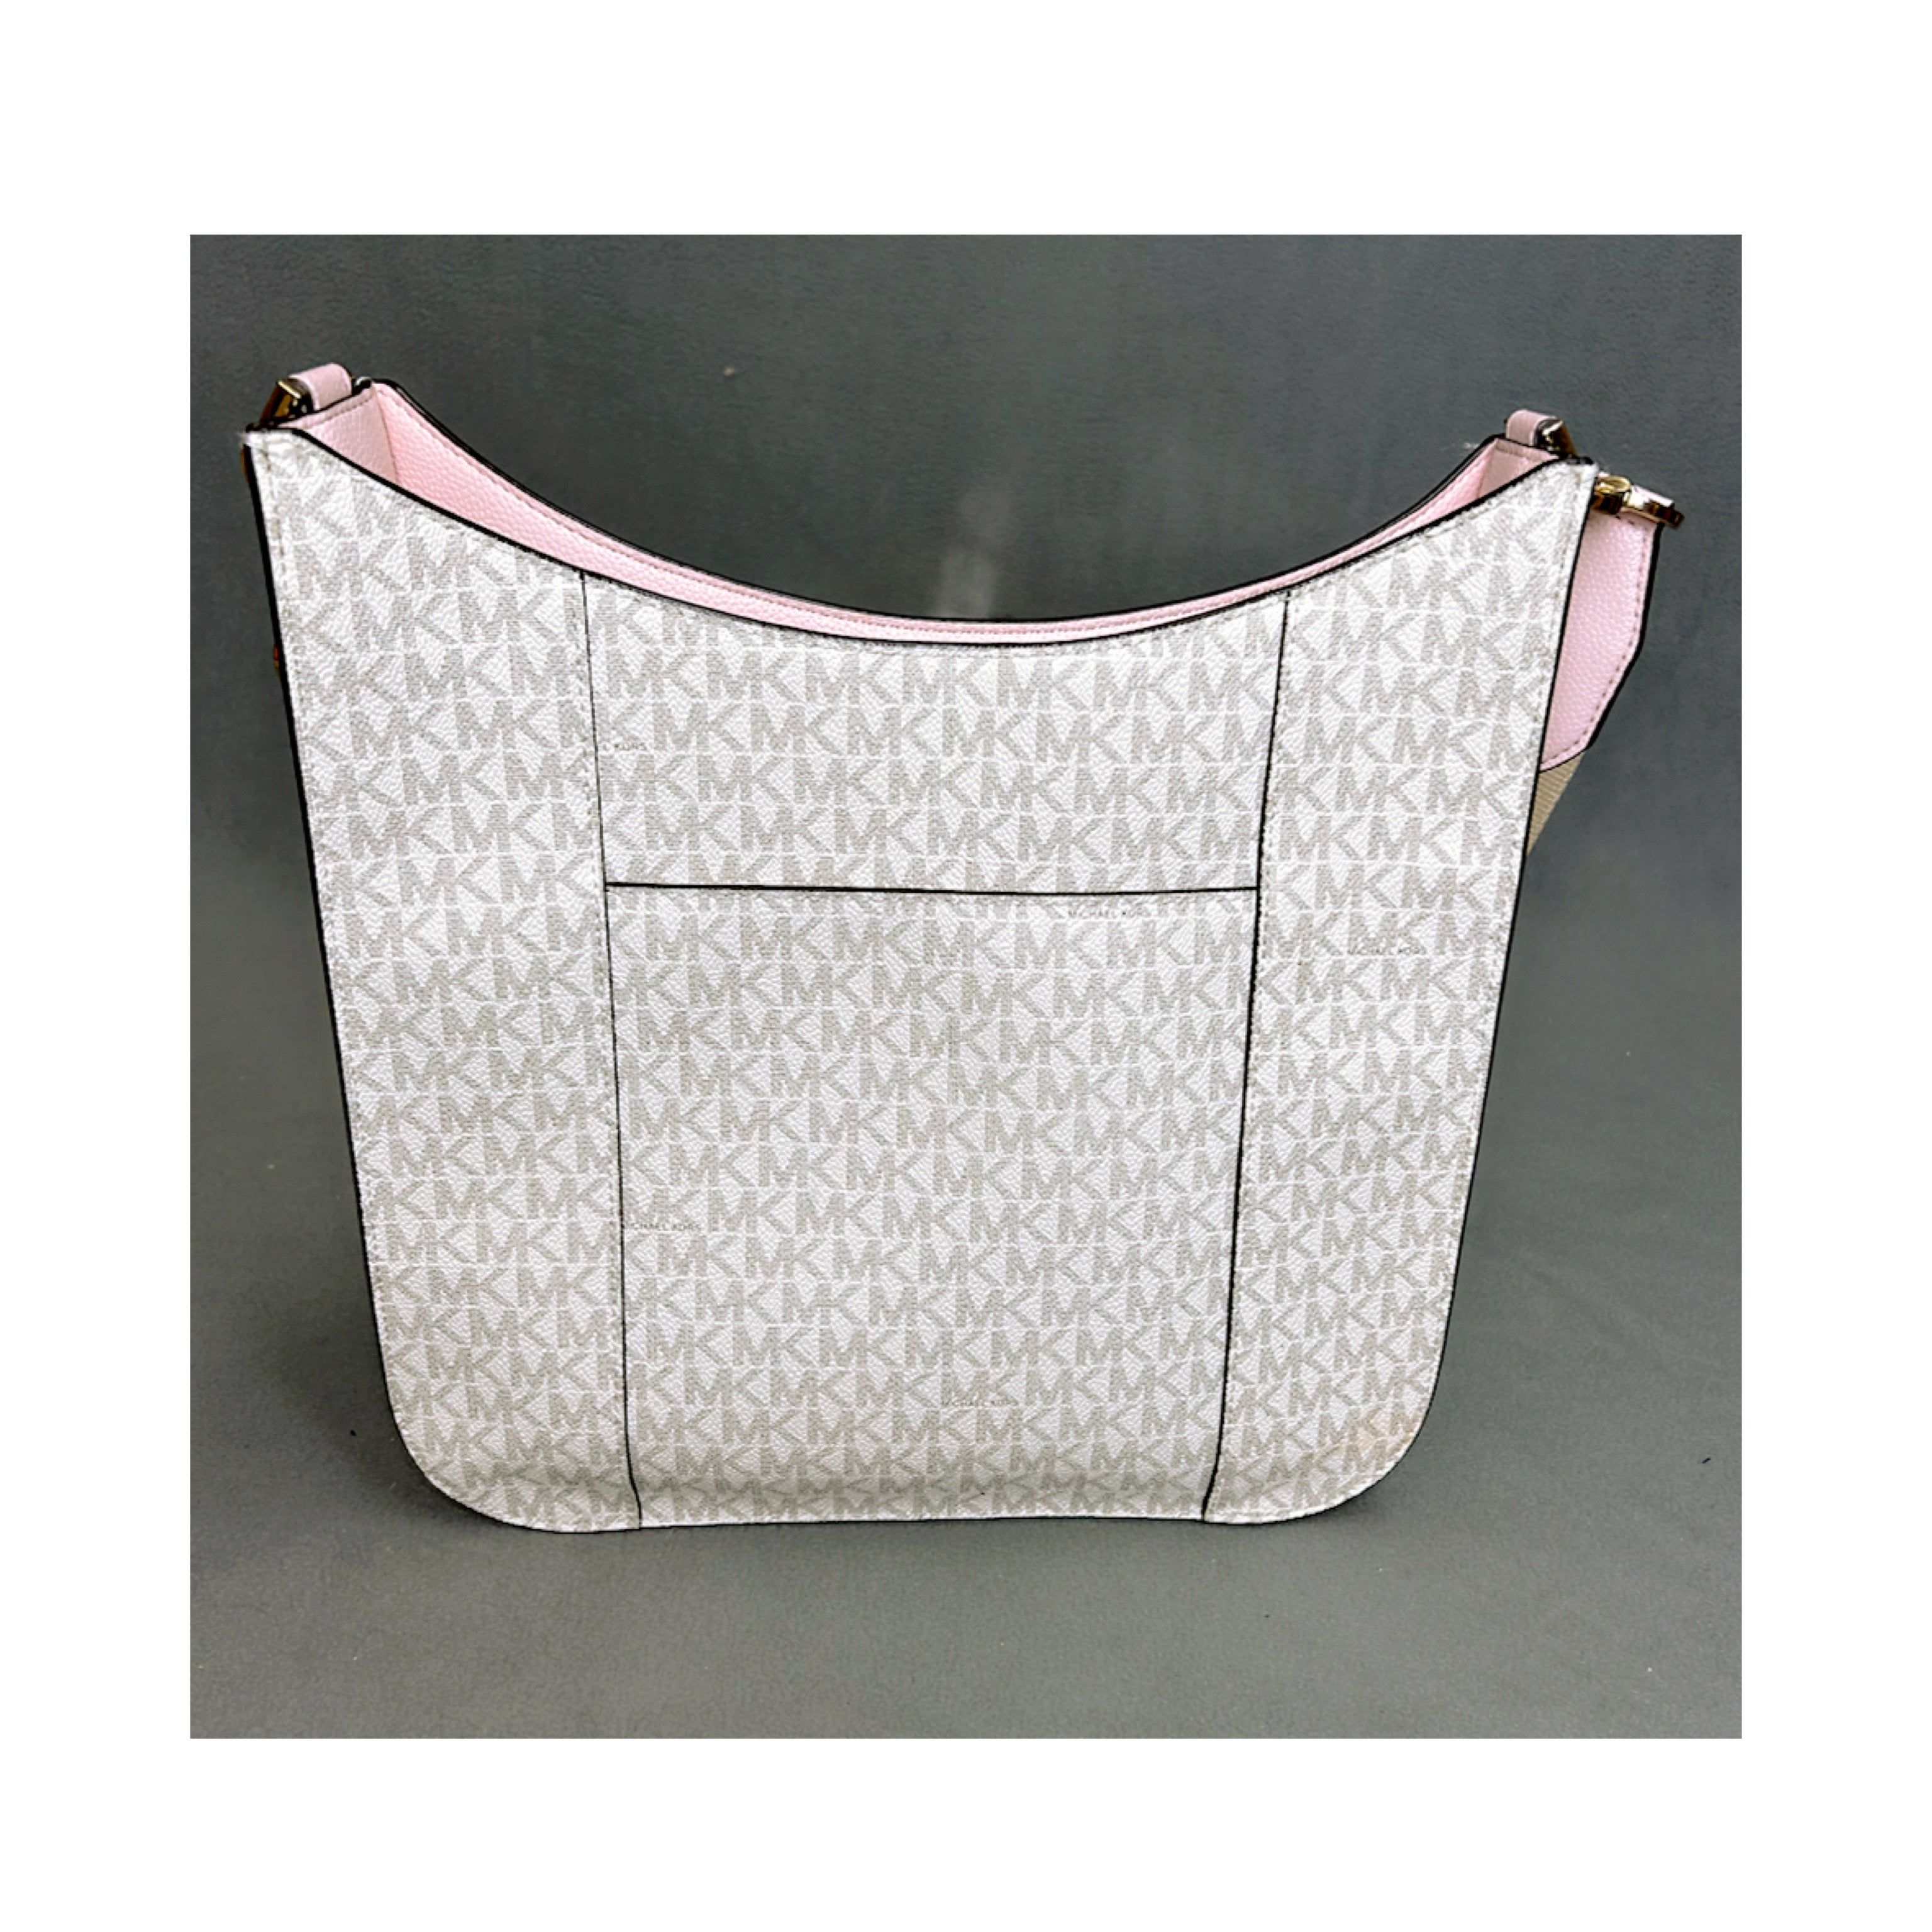 Michael Kors white, taupe and blush logo Briley bag